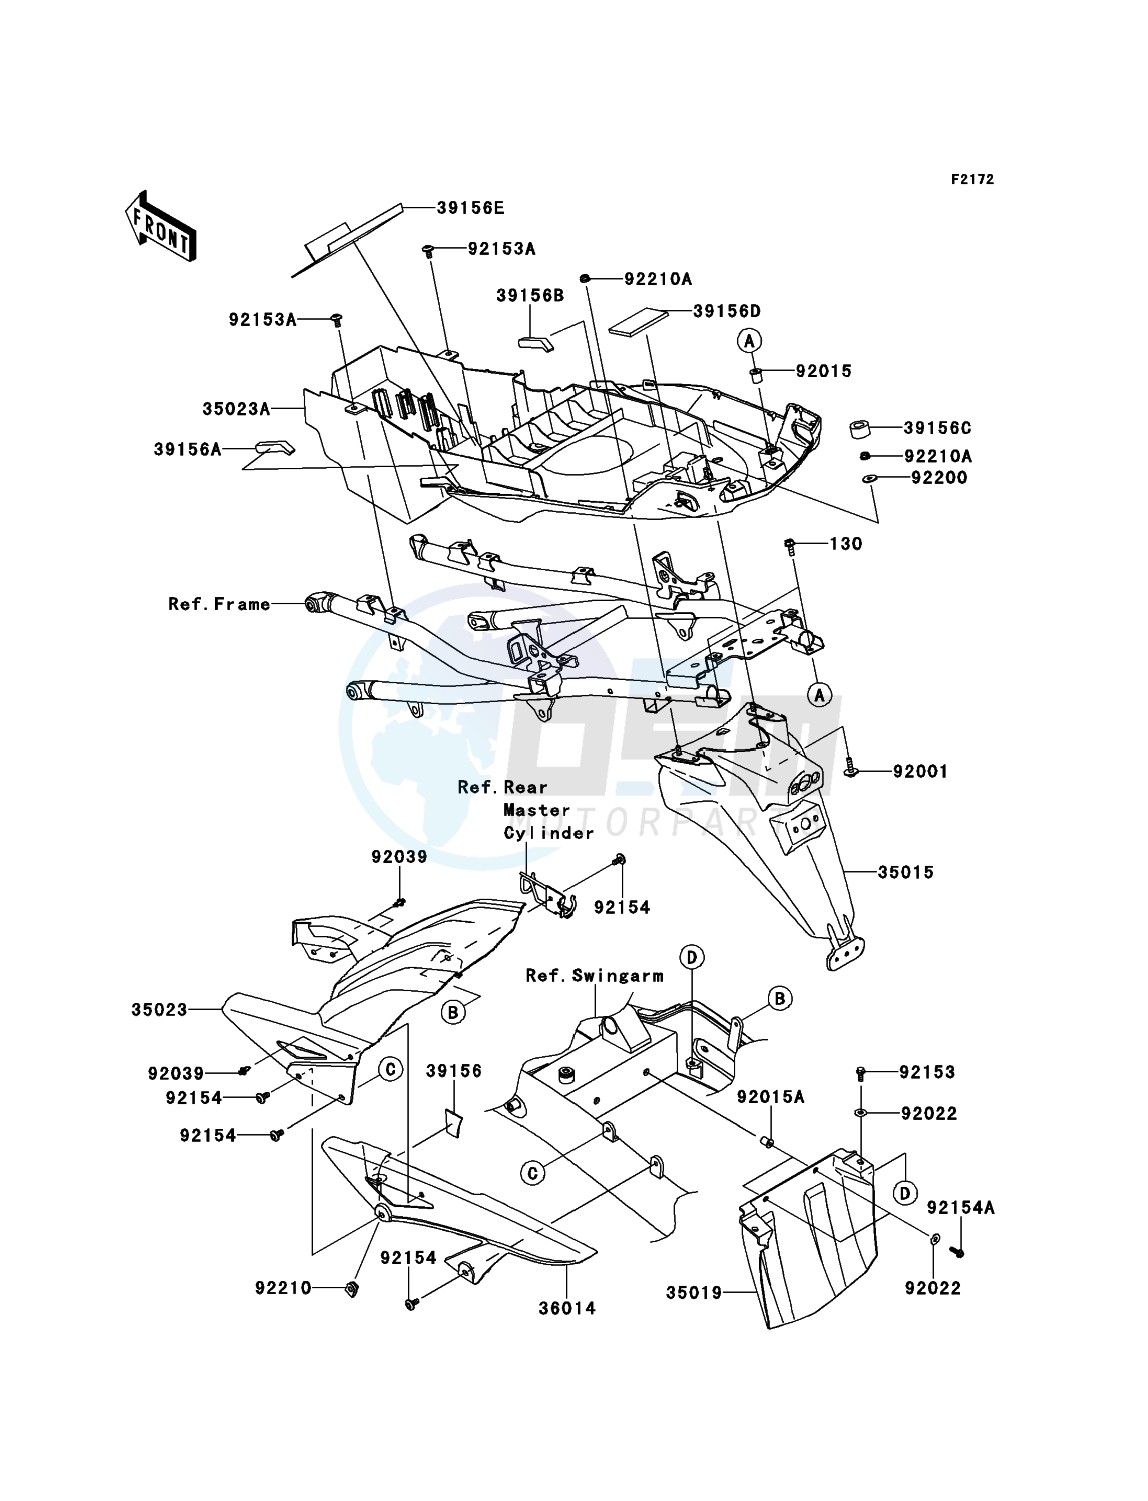 Rear Fender(s) blueprint